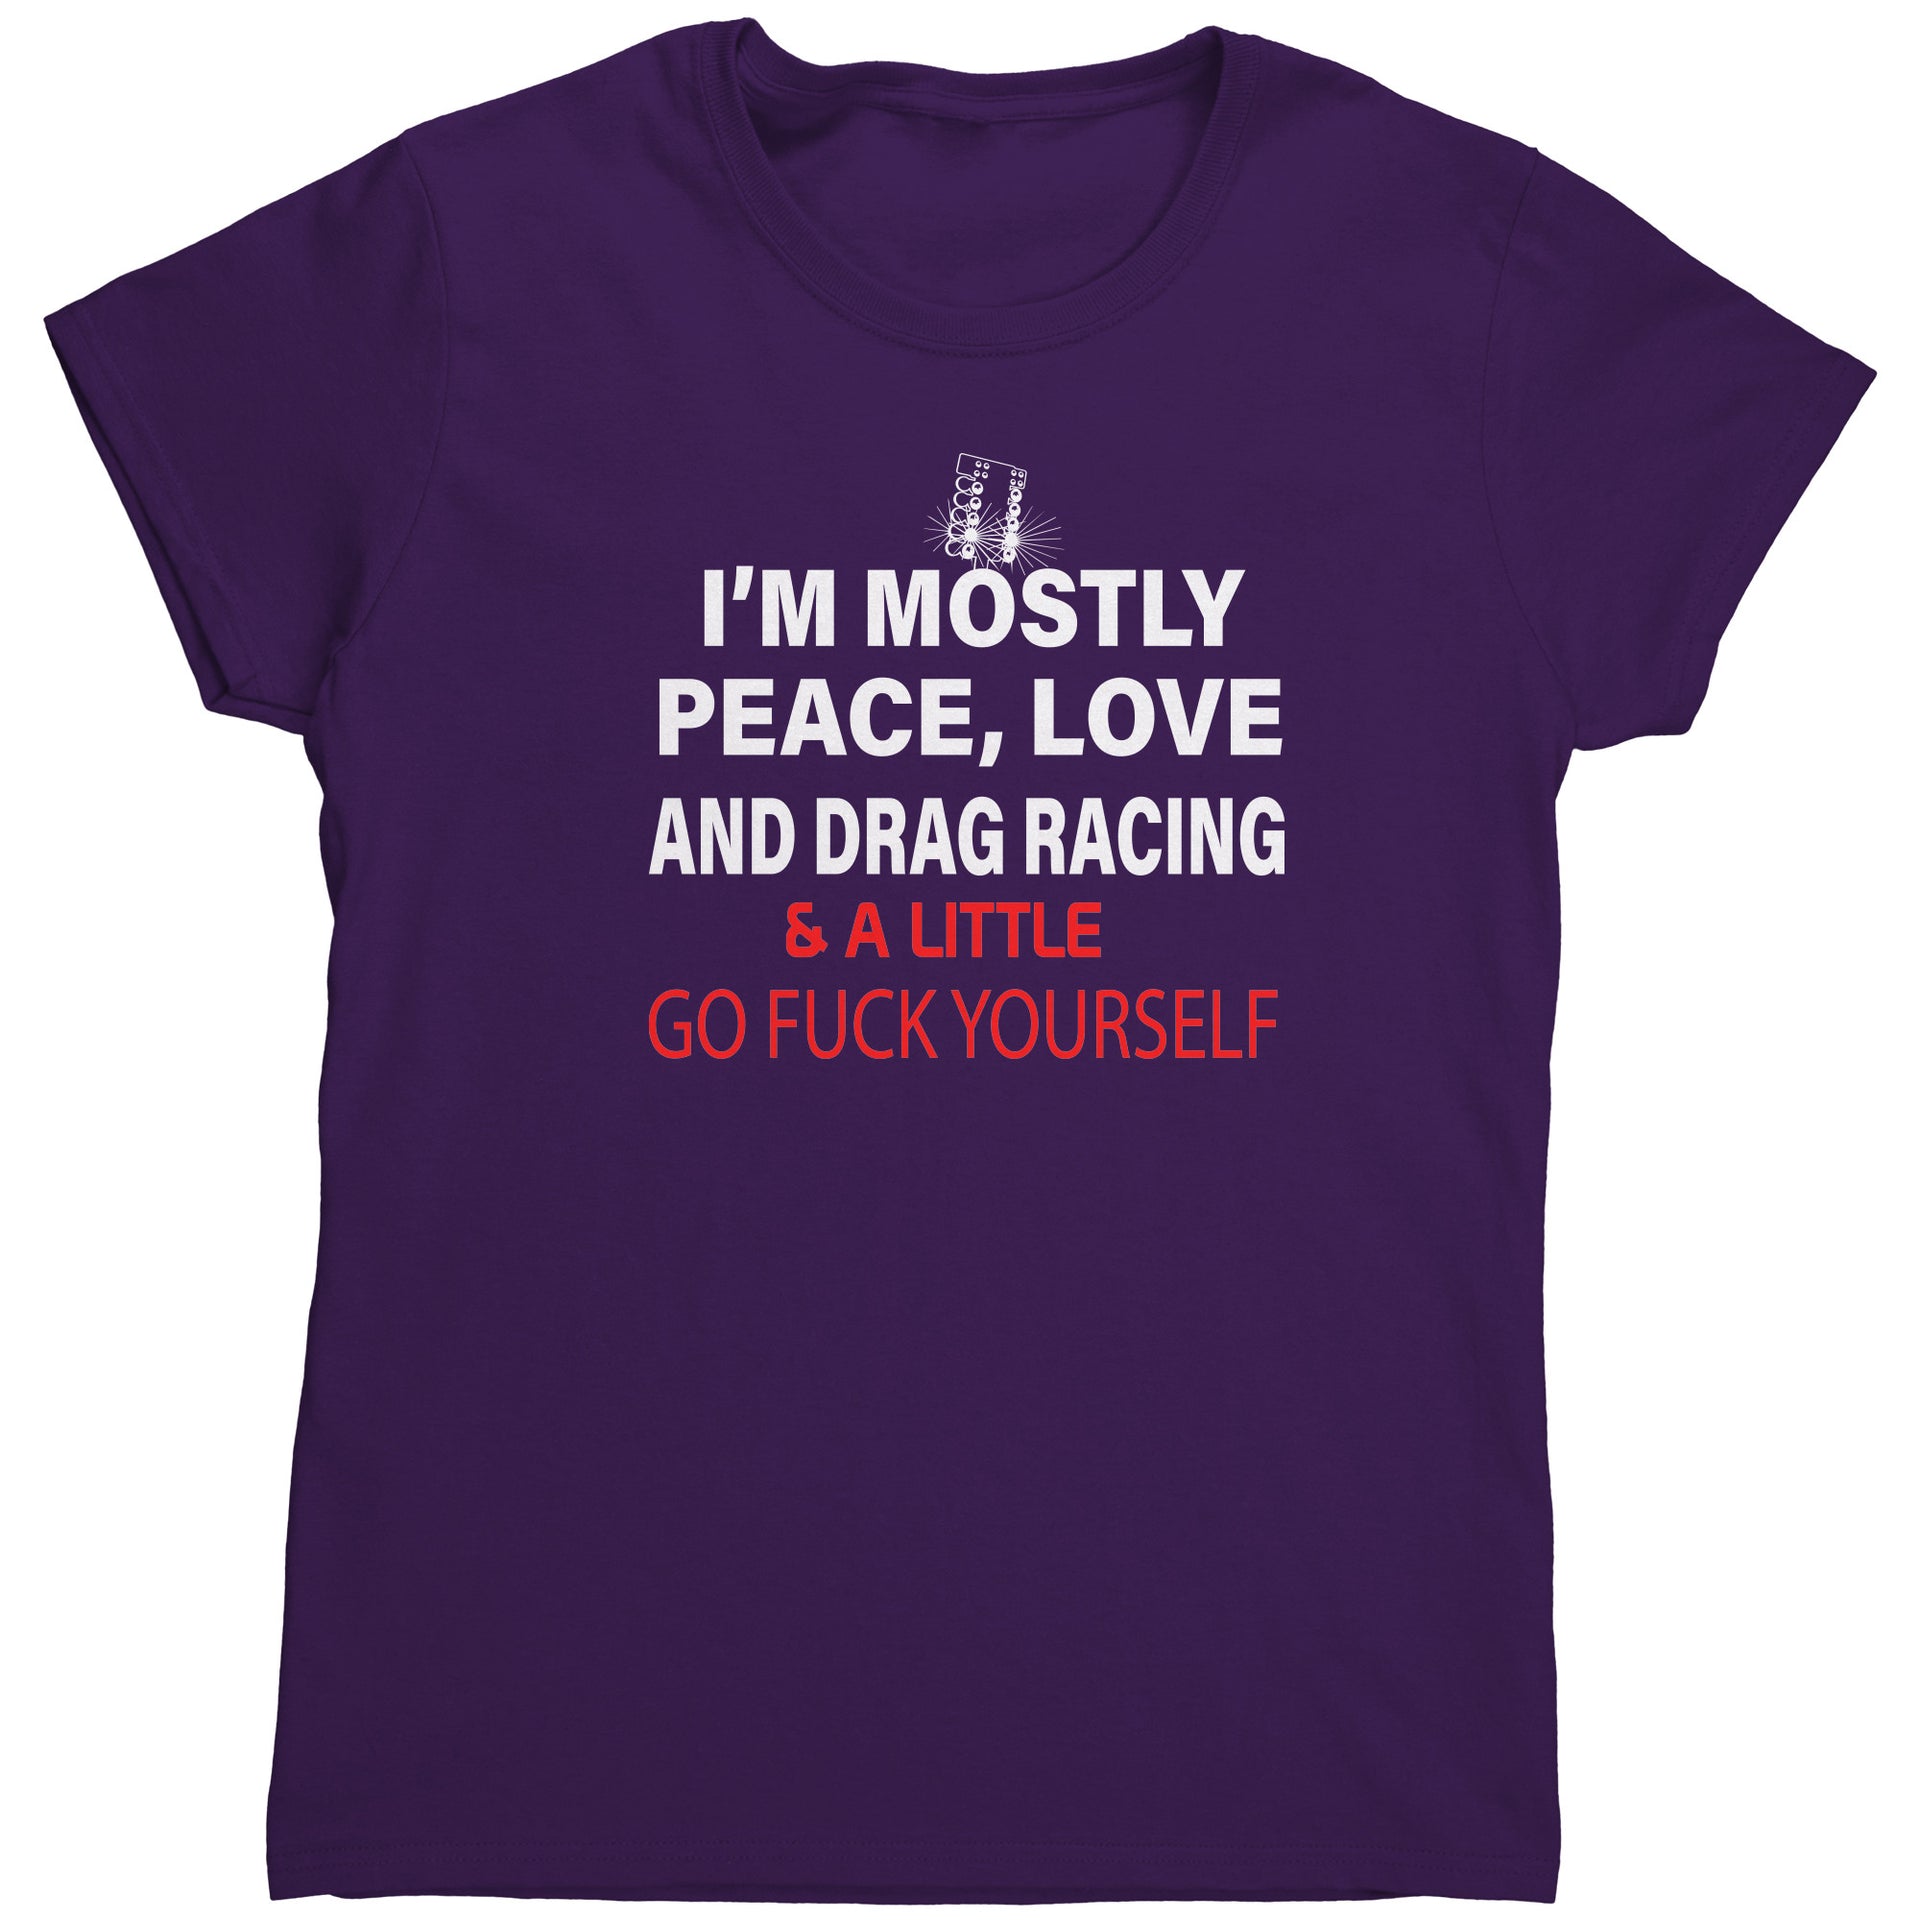 Drag racing t-shirts